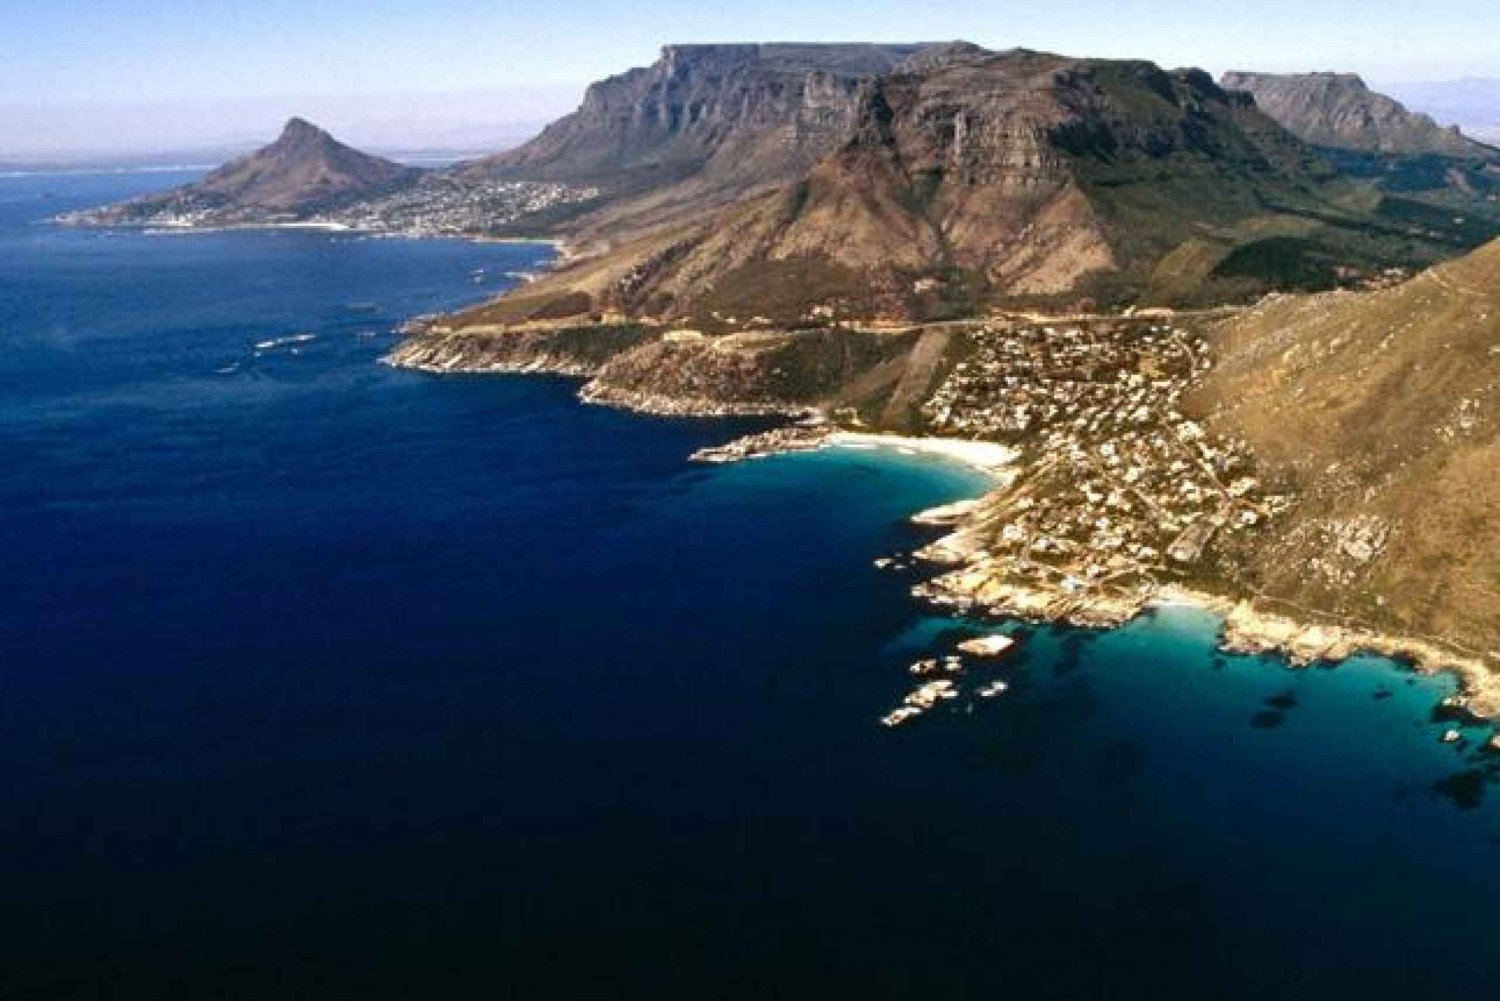 Kaapstad: Kaapse Schiereiland en Wijnlanden Full Day Combo Tour